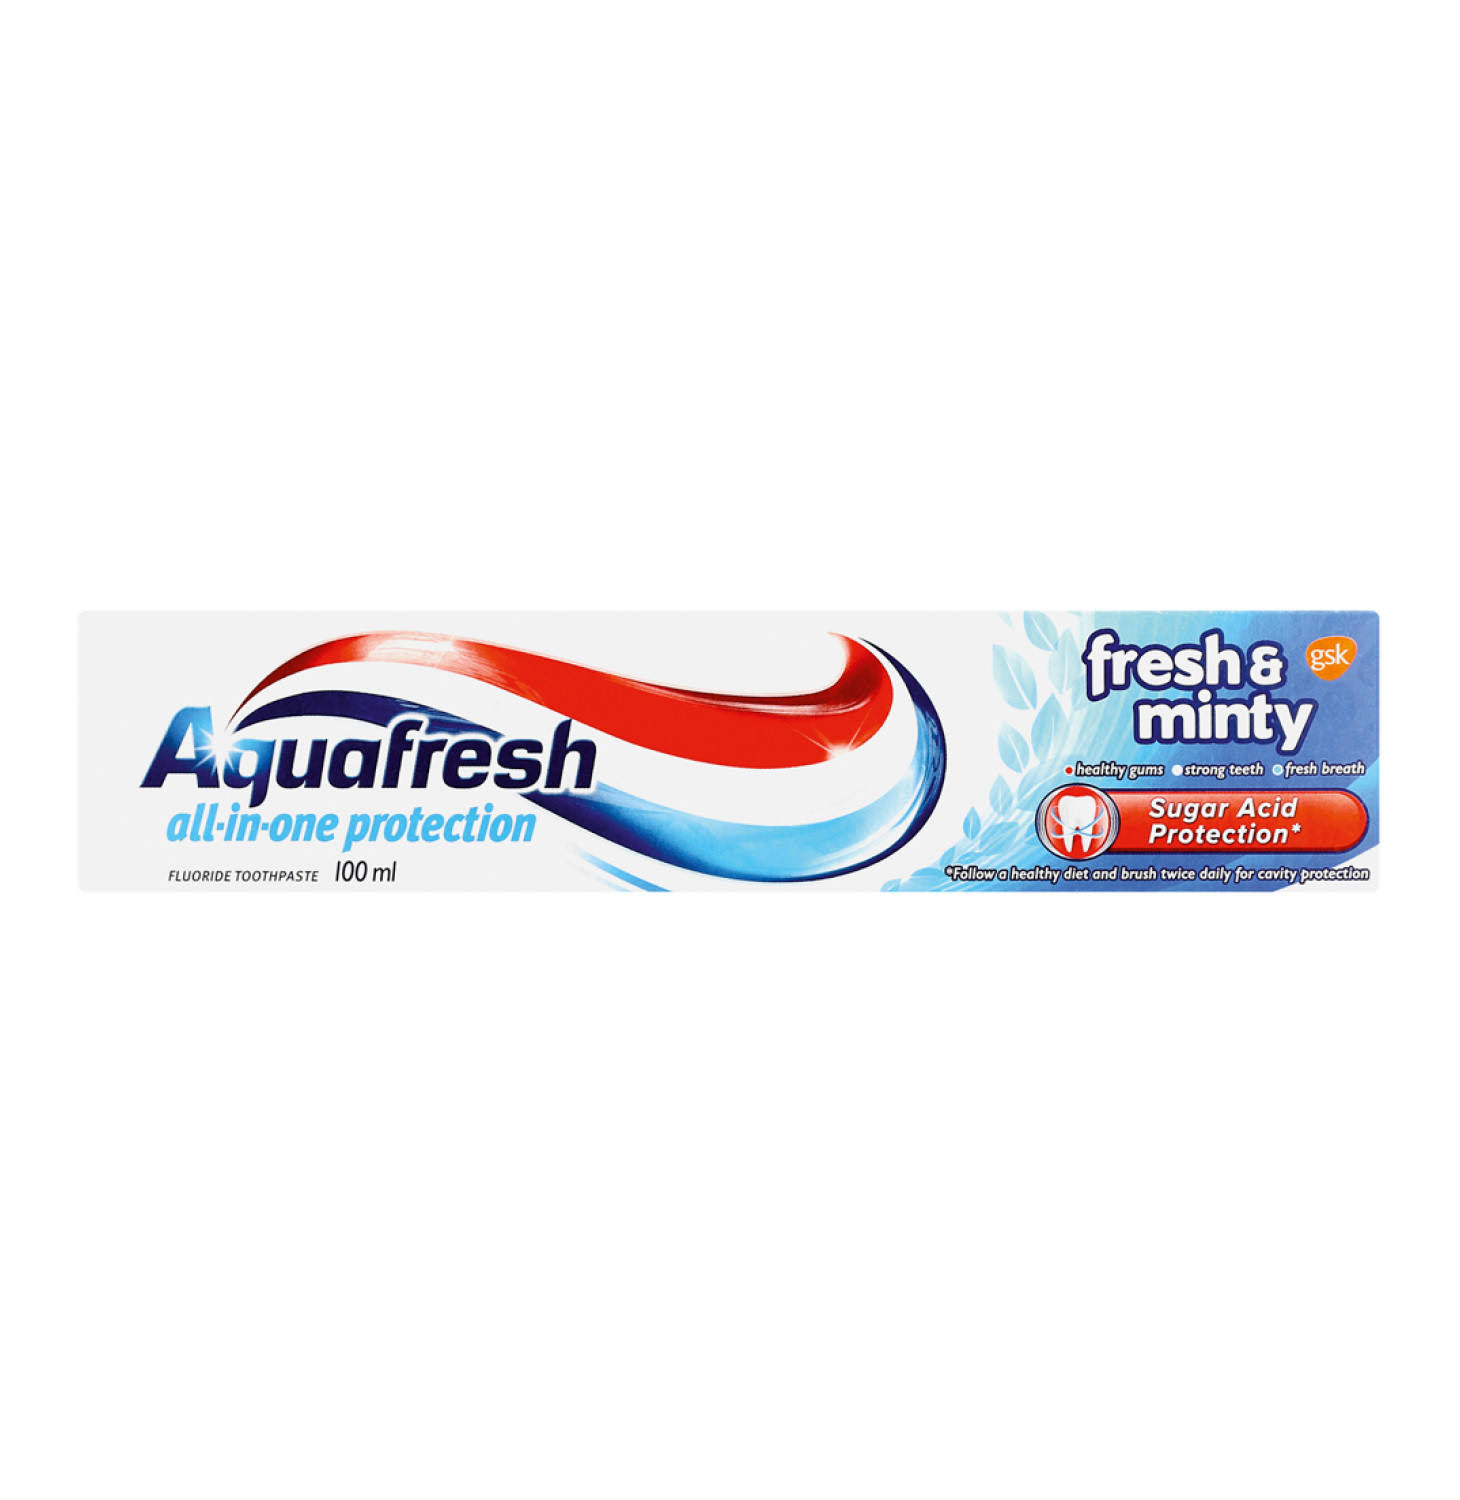 Aquafresh Fresh & Minty Toothpaste - 100ml